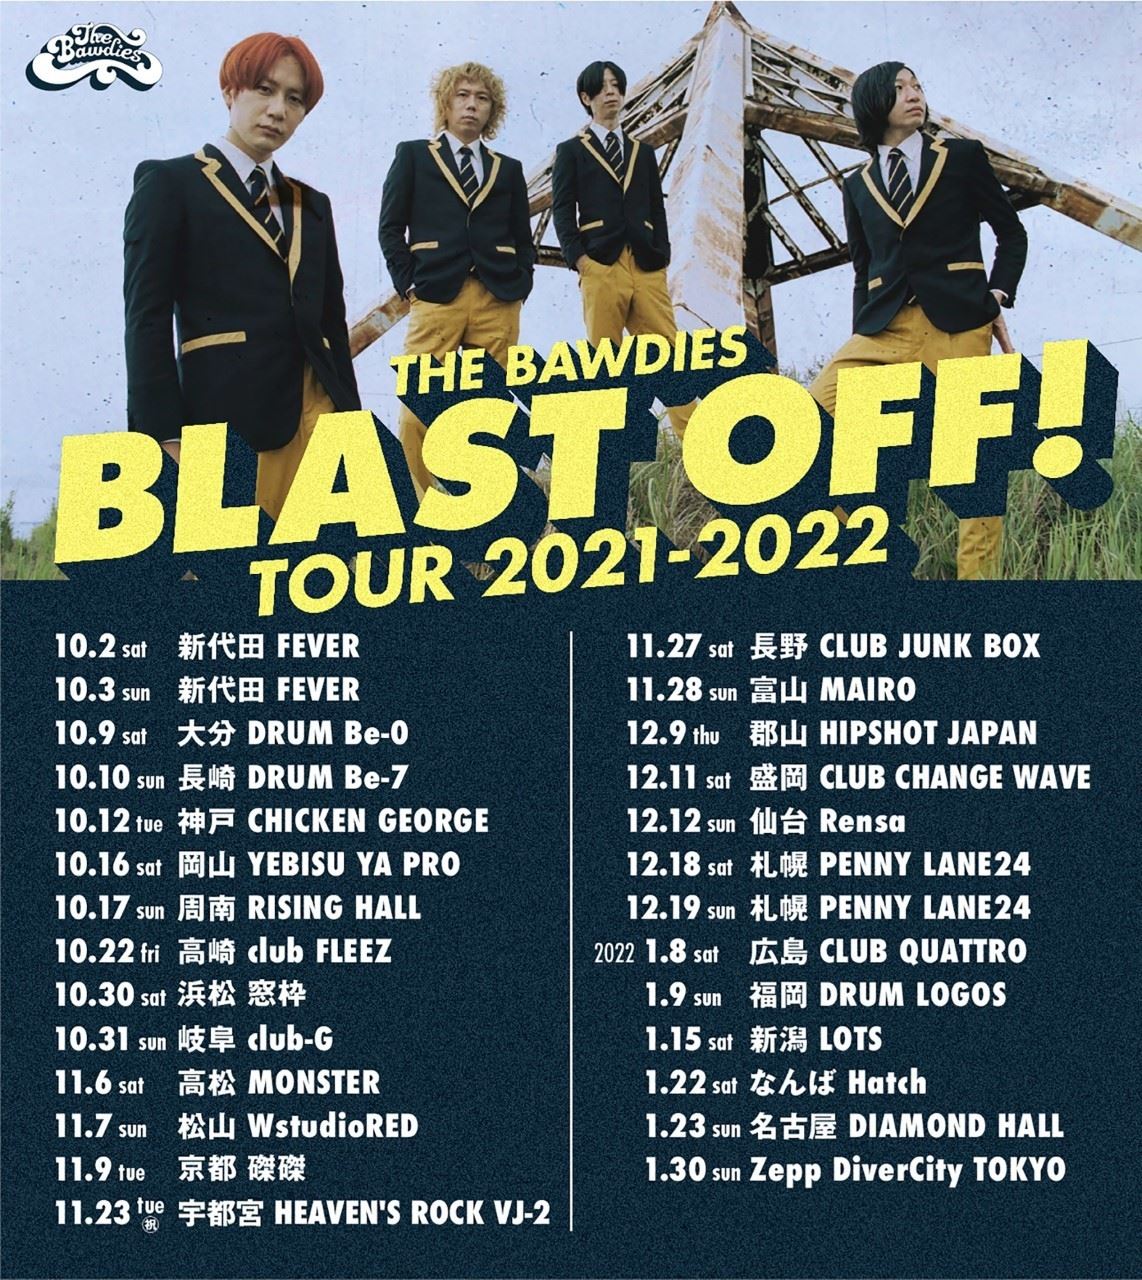 『BLAST OFF! TOUR 2021-2022』告知画像